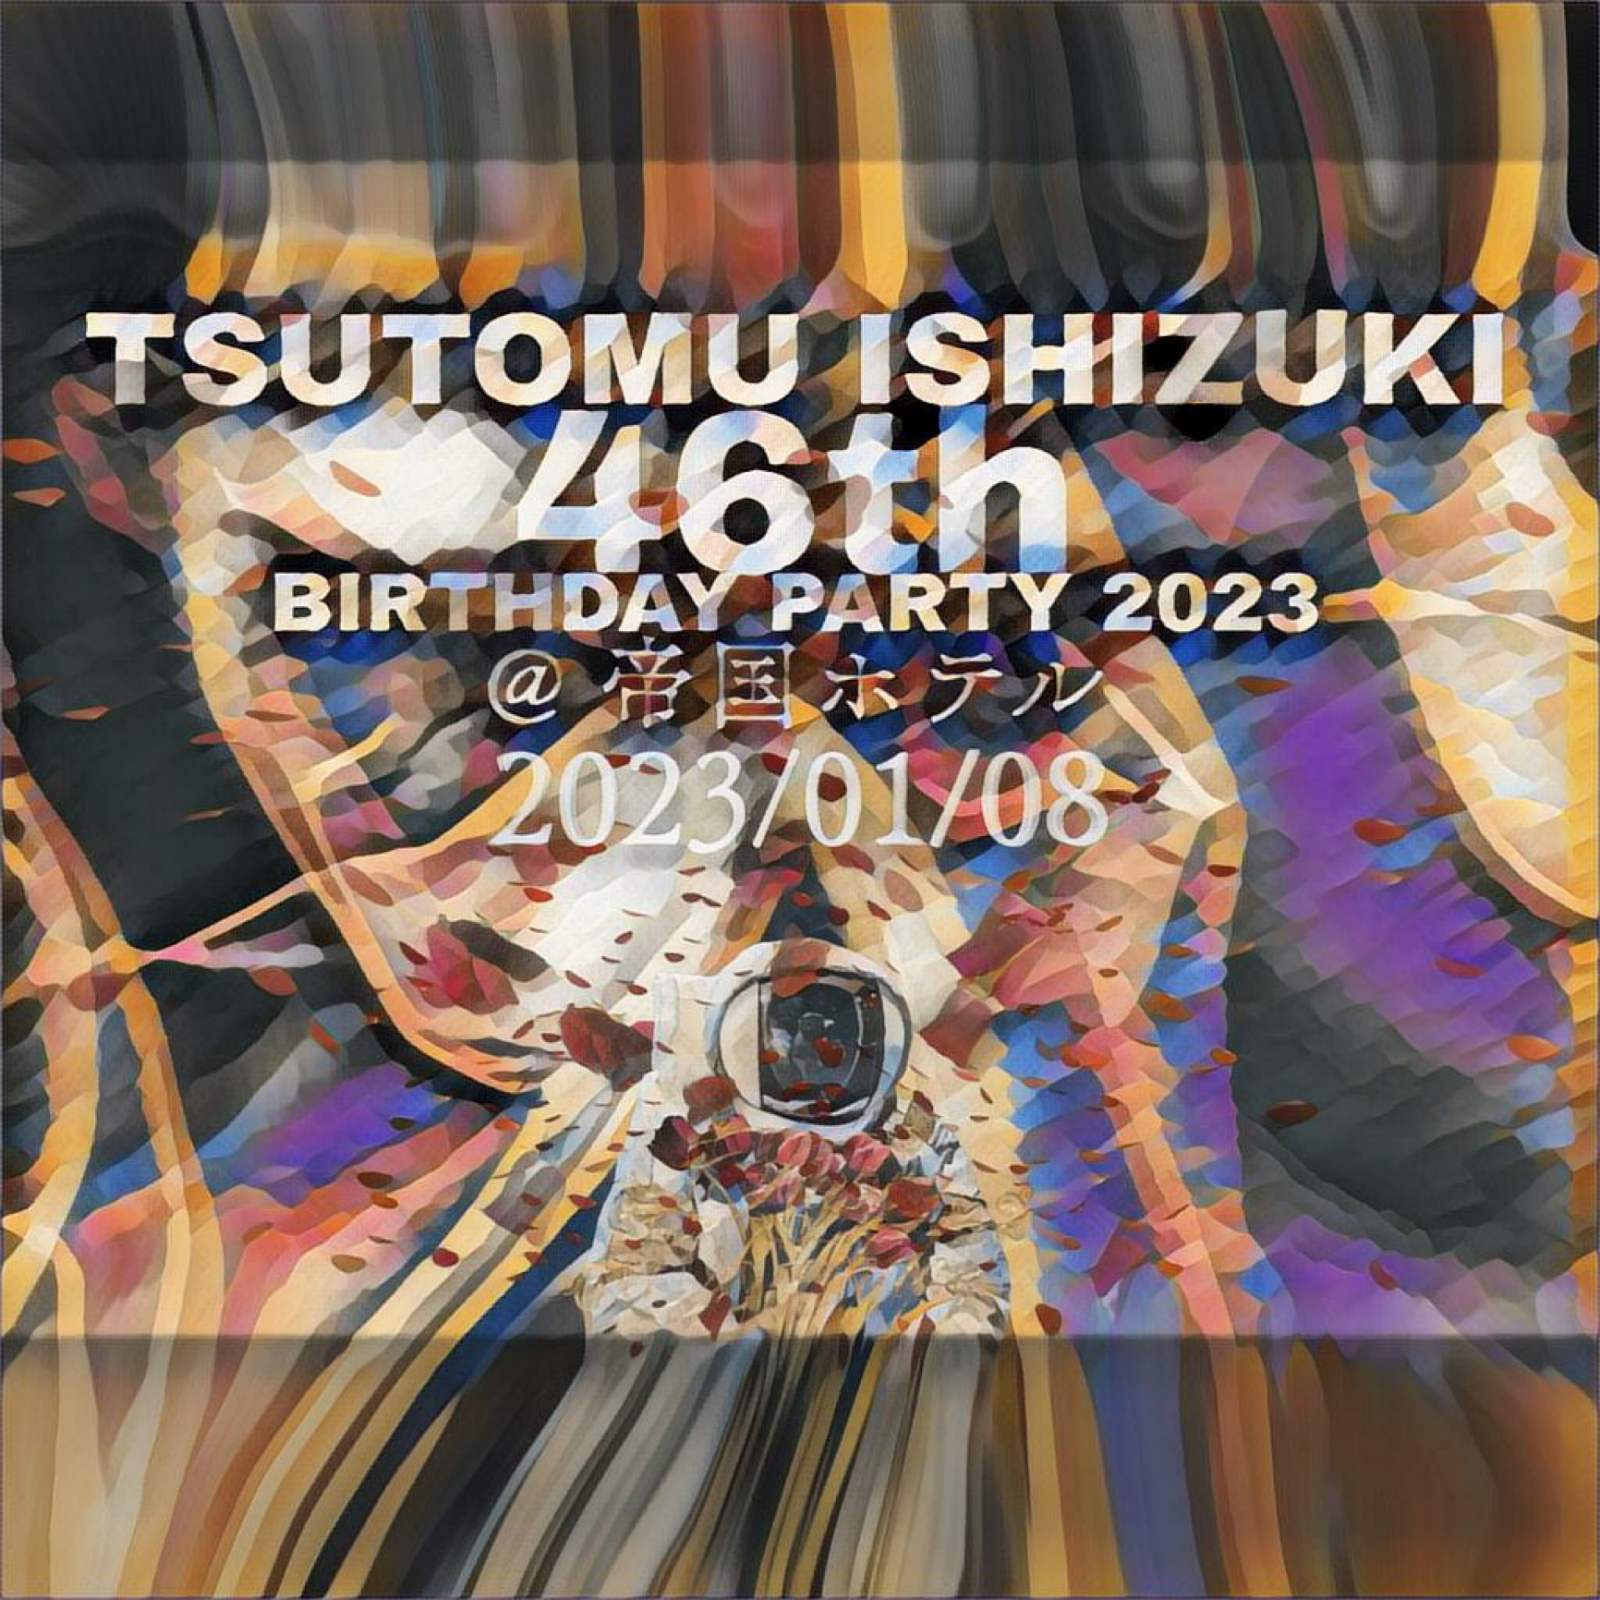 2023 TSUTOMU ISHIZUKI BIRTHDAY PARTY 1部